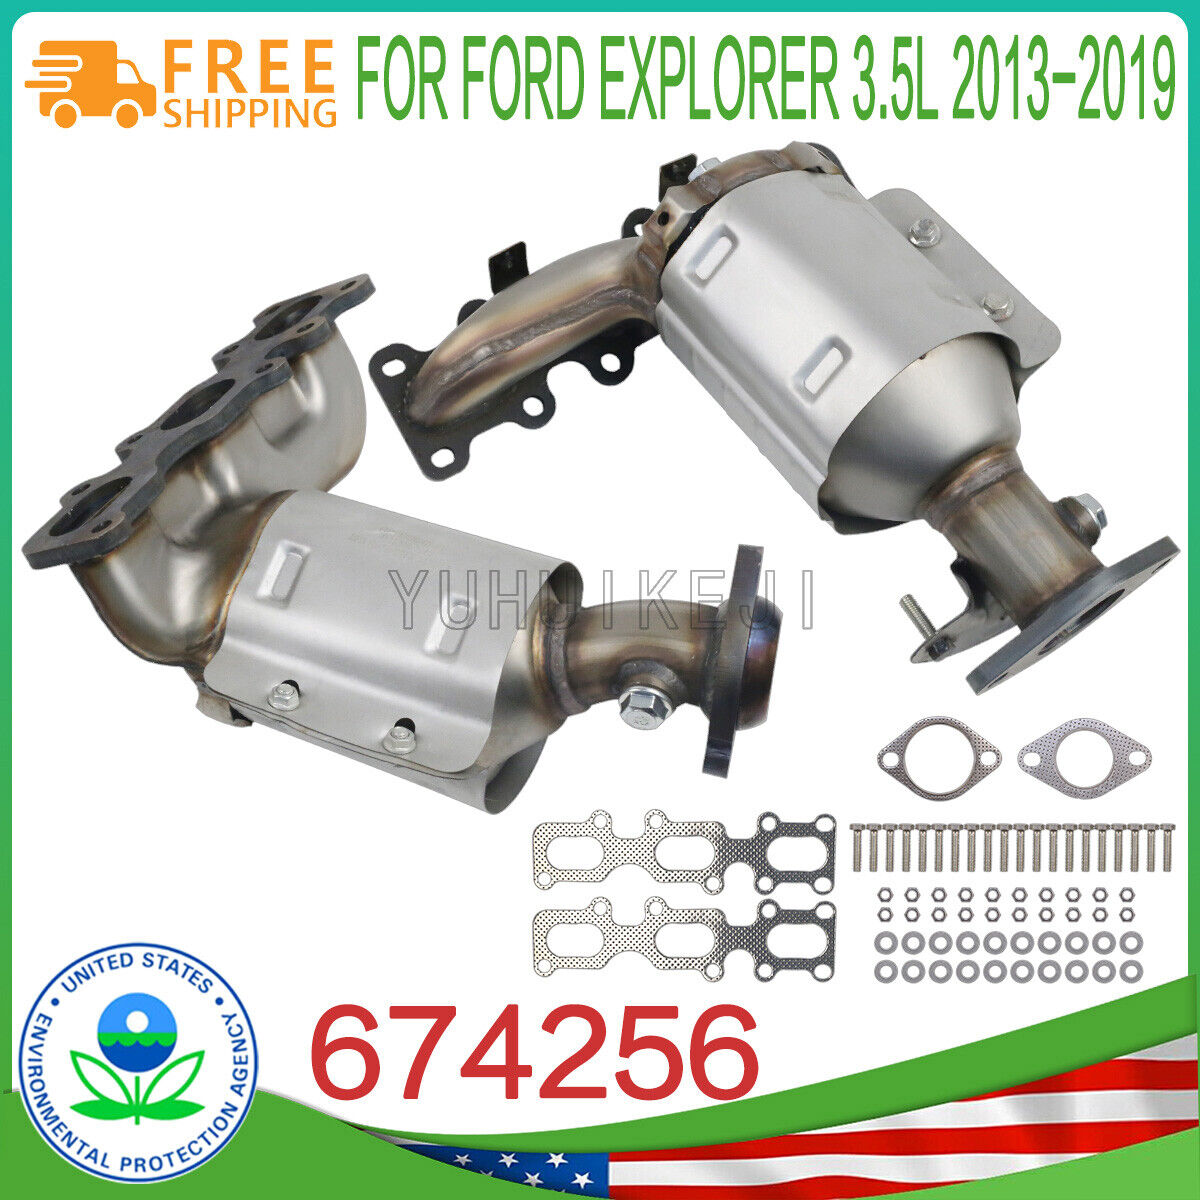 For Ford Explorer V6 3.5L 2013-2019 Manifold Catalytic Converters High Flow Cat